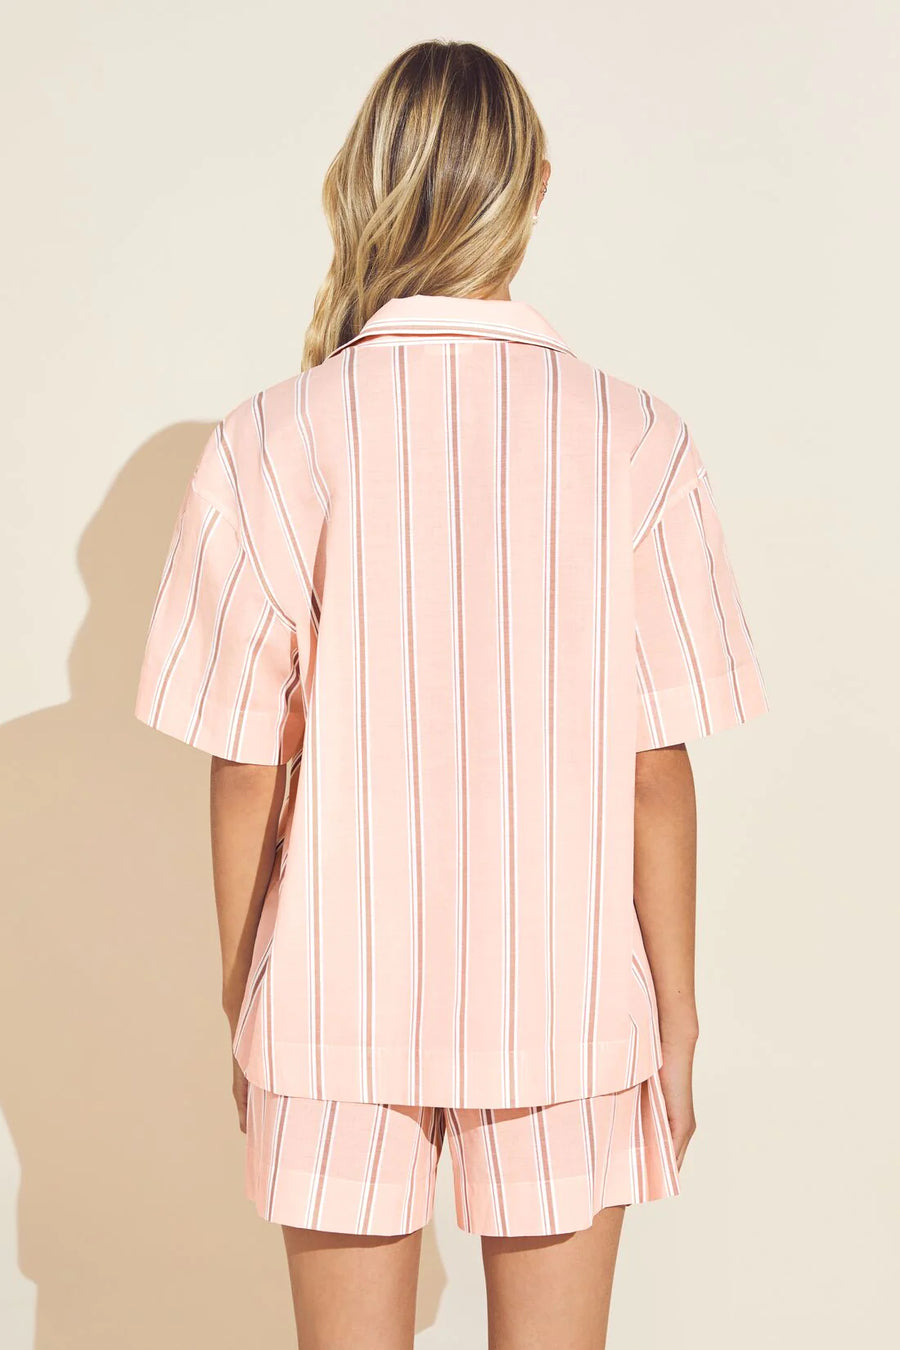 EBERJEY Organic Sandwashed Cotton Short Pajama Set in Color: 